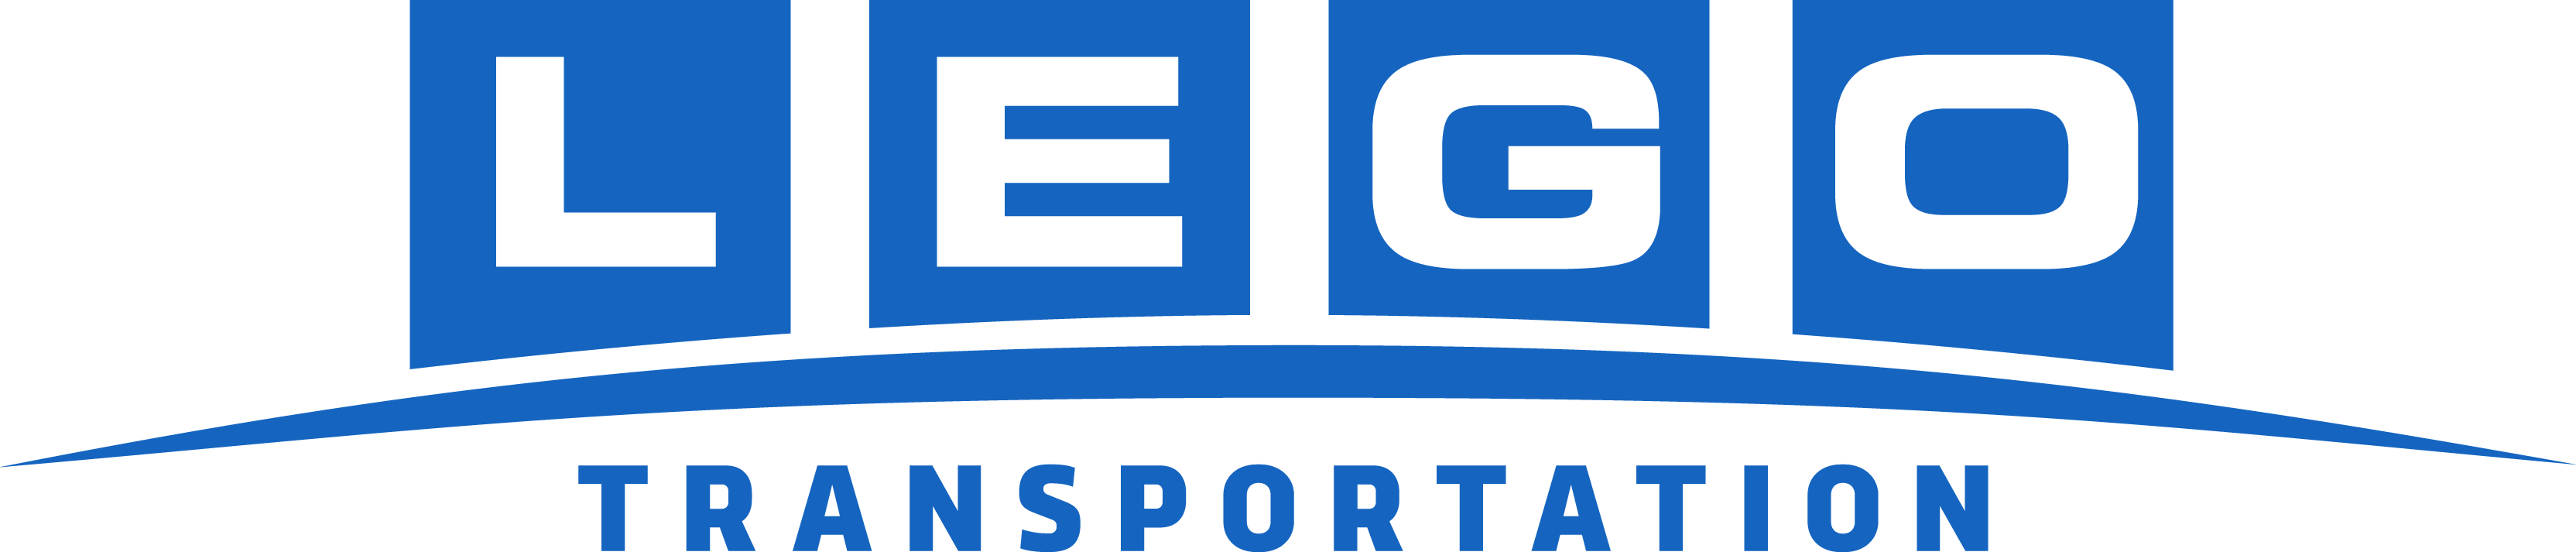 lego transportation png logo